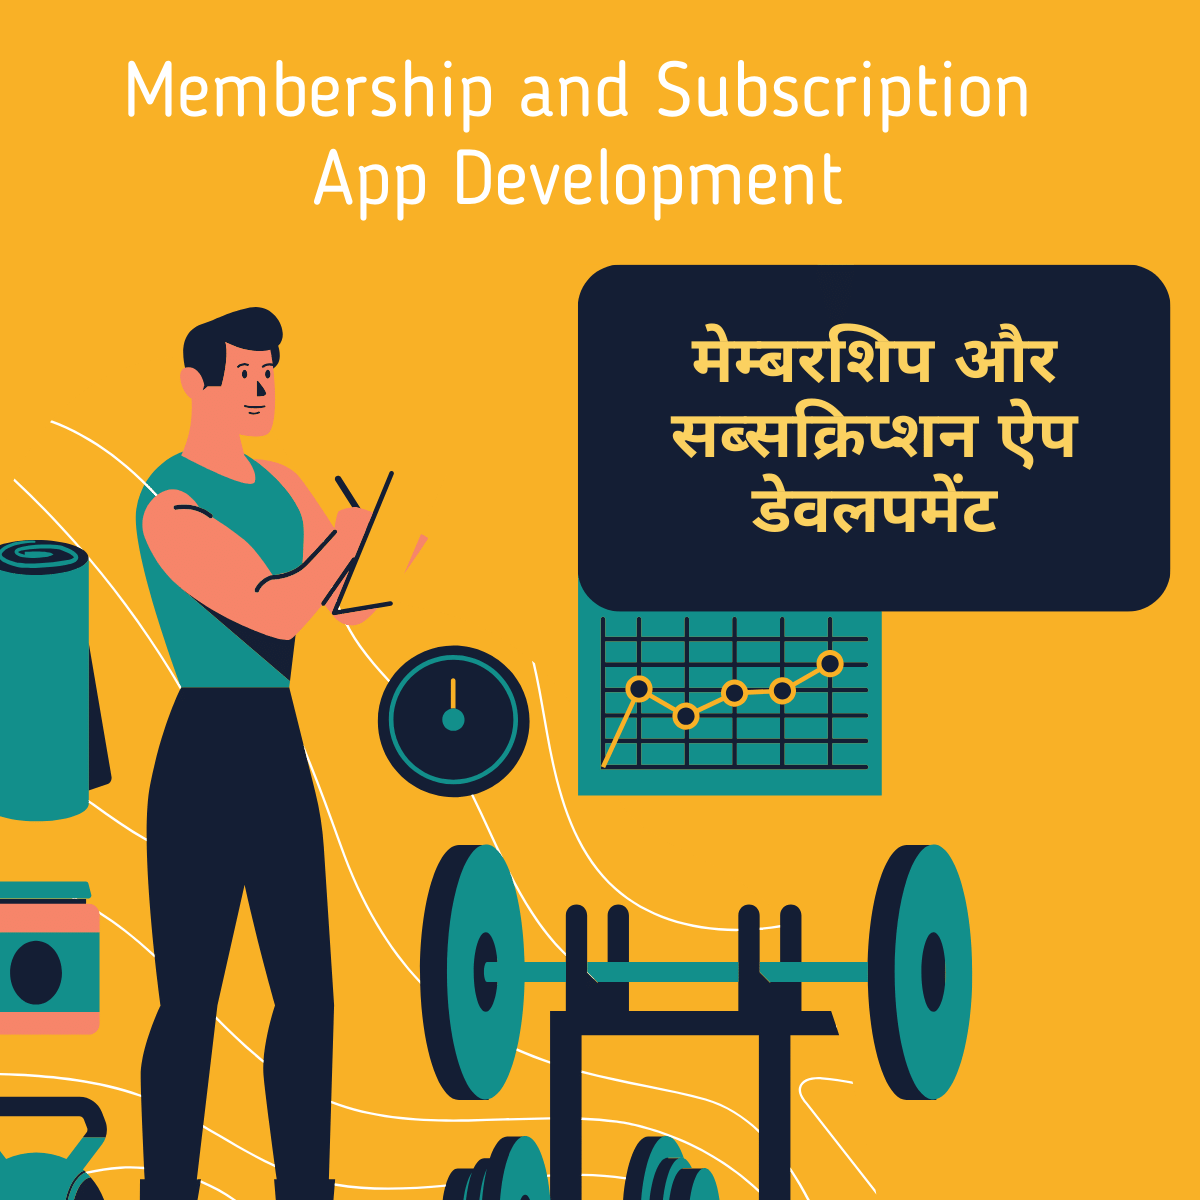 Membership and Subscription App Development मेम्बरशिप और सब्सक्रिप्शन ऐप डेवलपमेंट